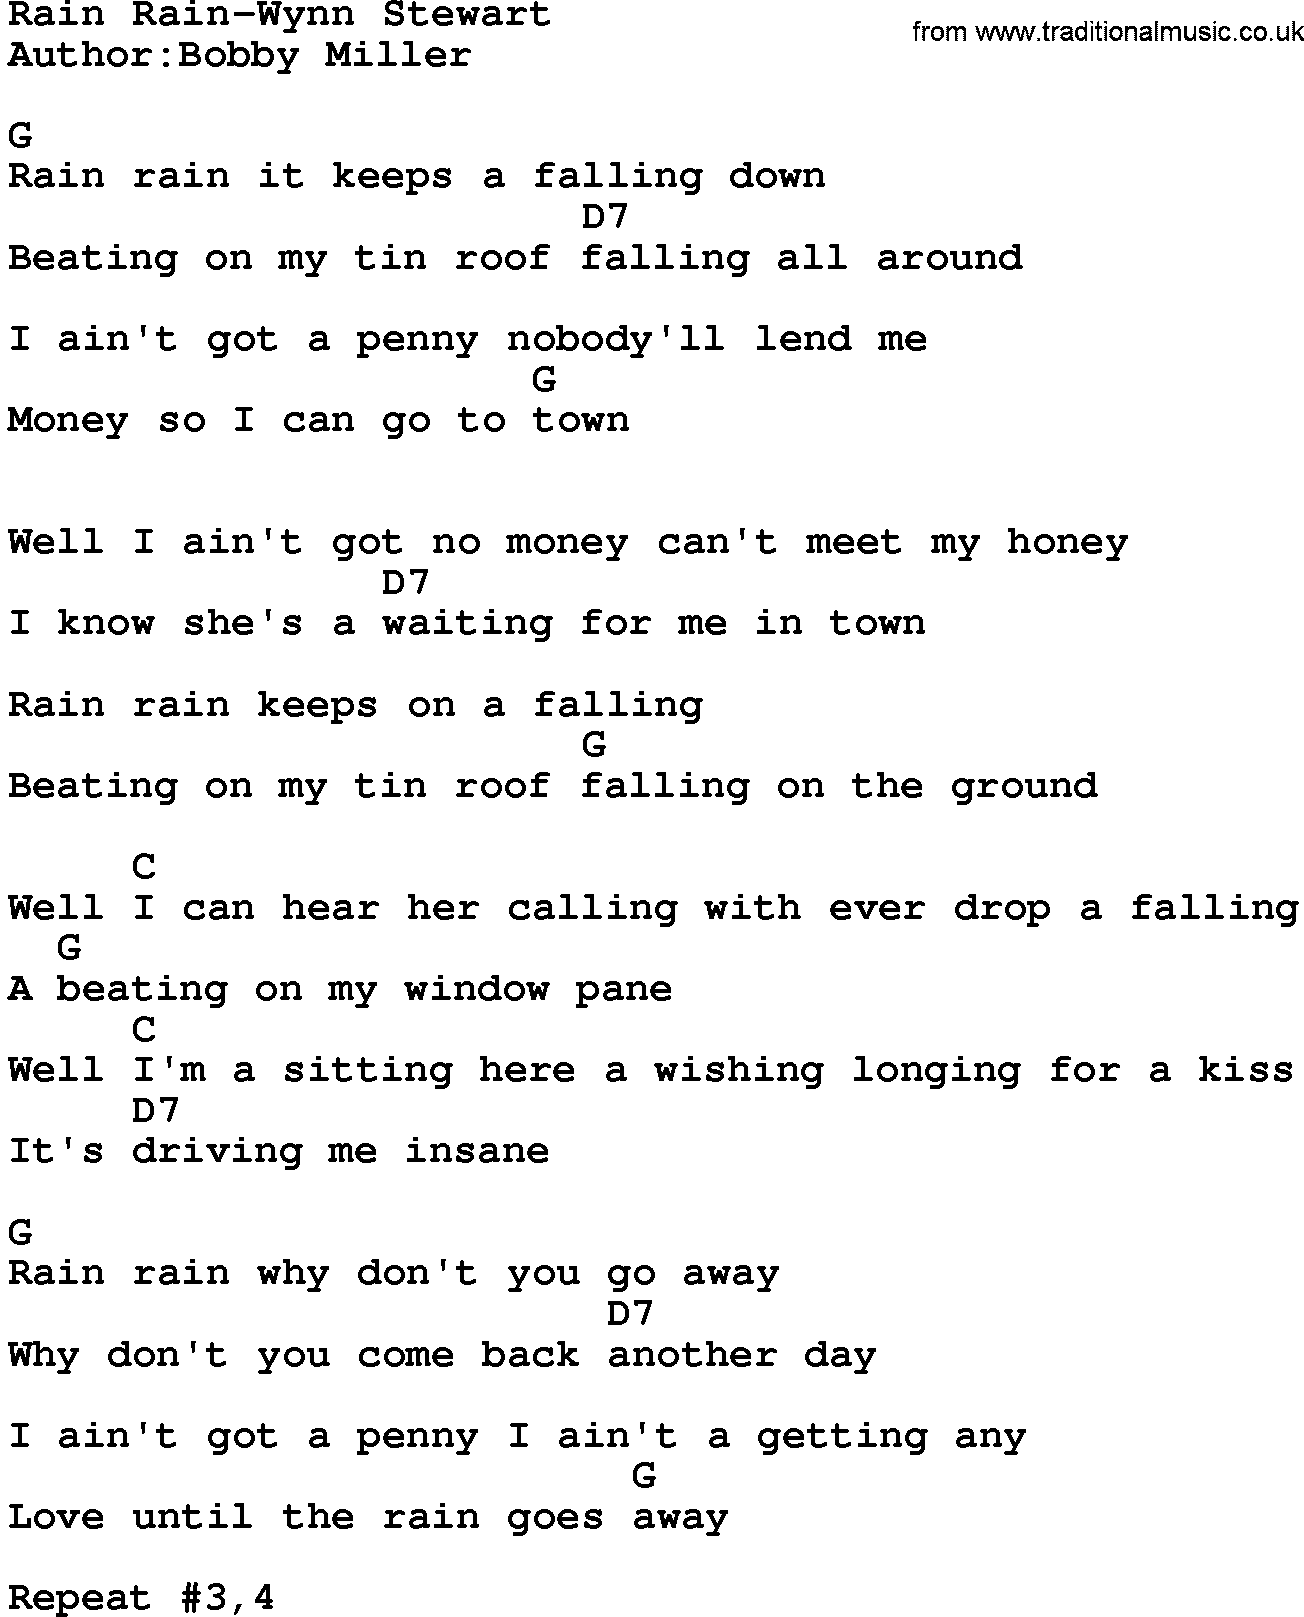 Country music song: Rain Rain-Wynn Stewart lyrics and chords